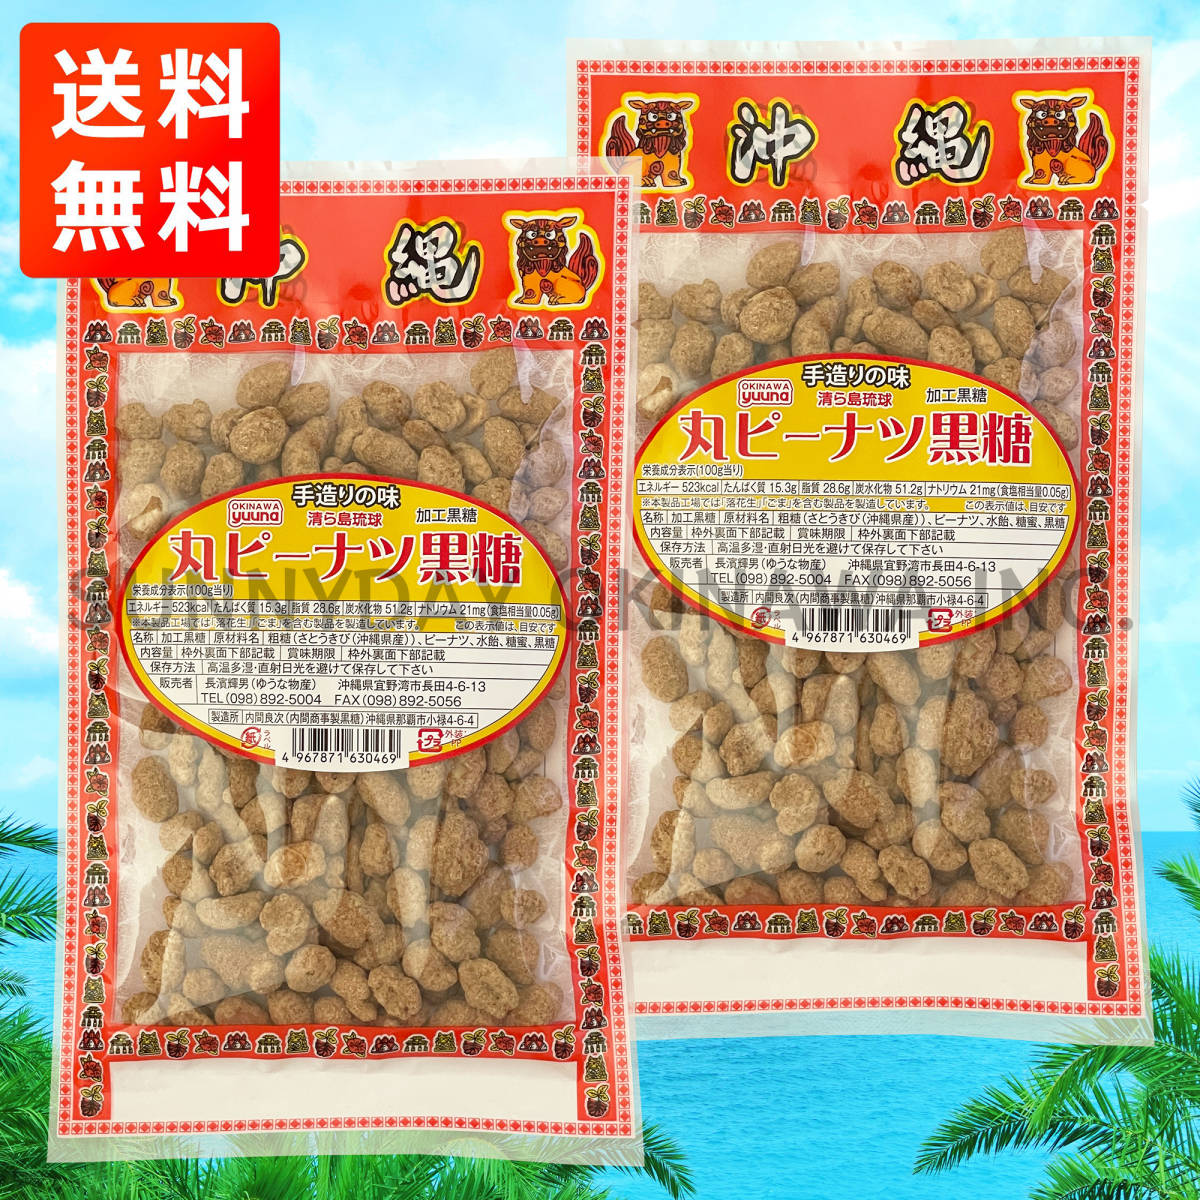  circle pi-natsu brown sugar 120g 2 sack Okinawa prefecture production brown sugar Peanuts pastry . earth production your order 